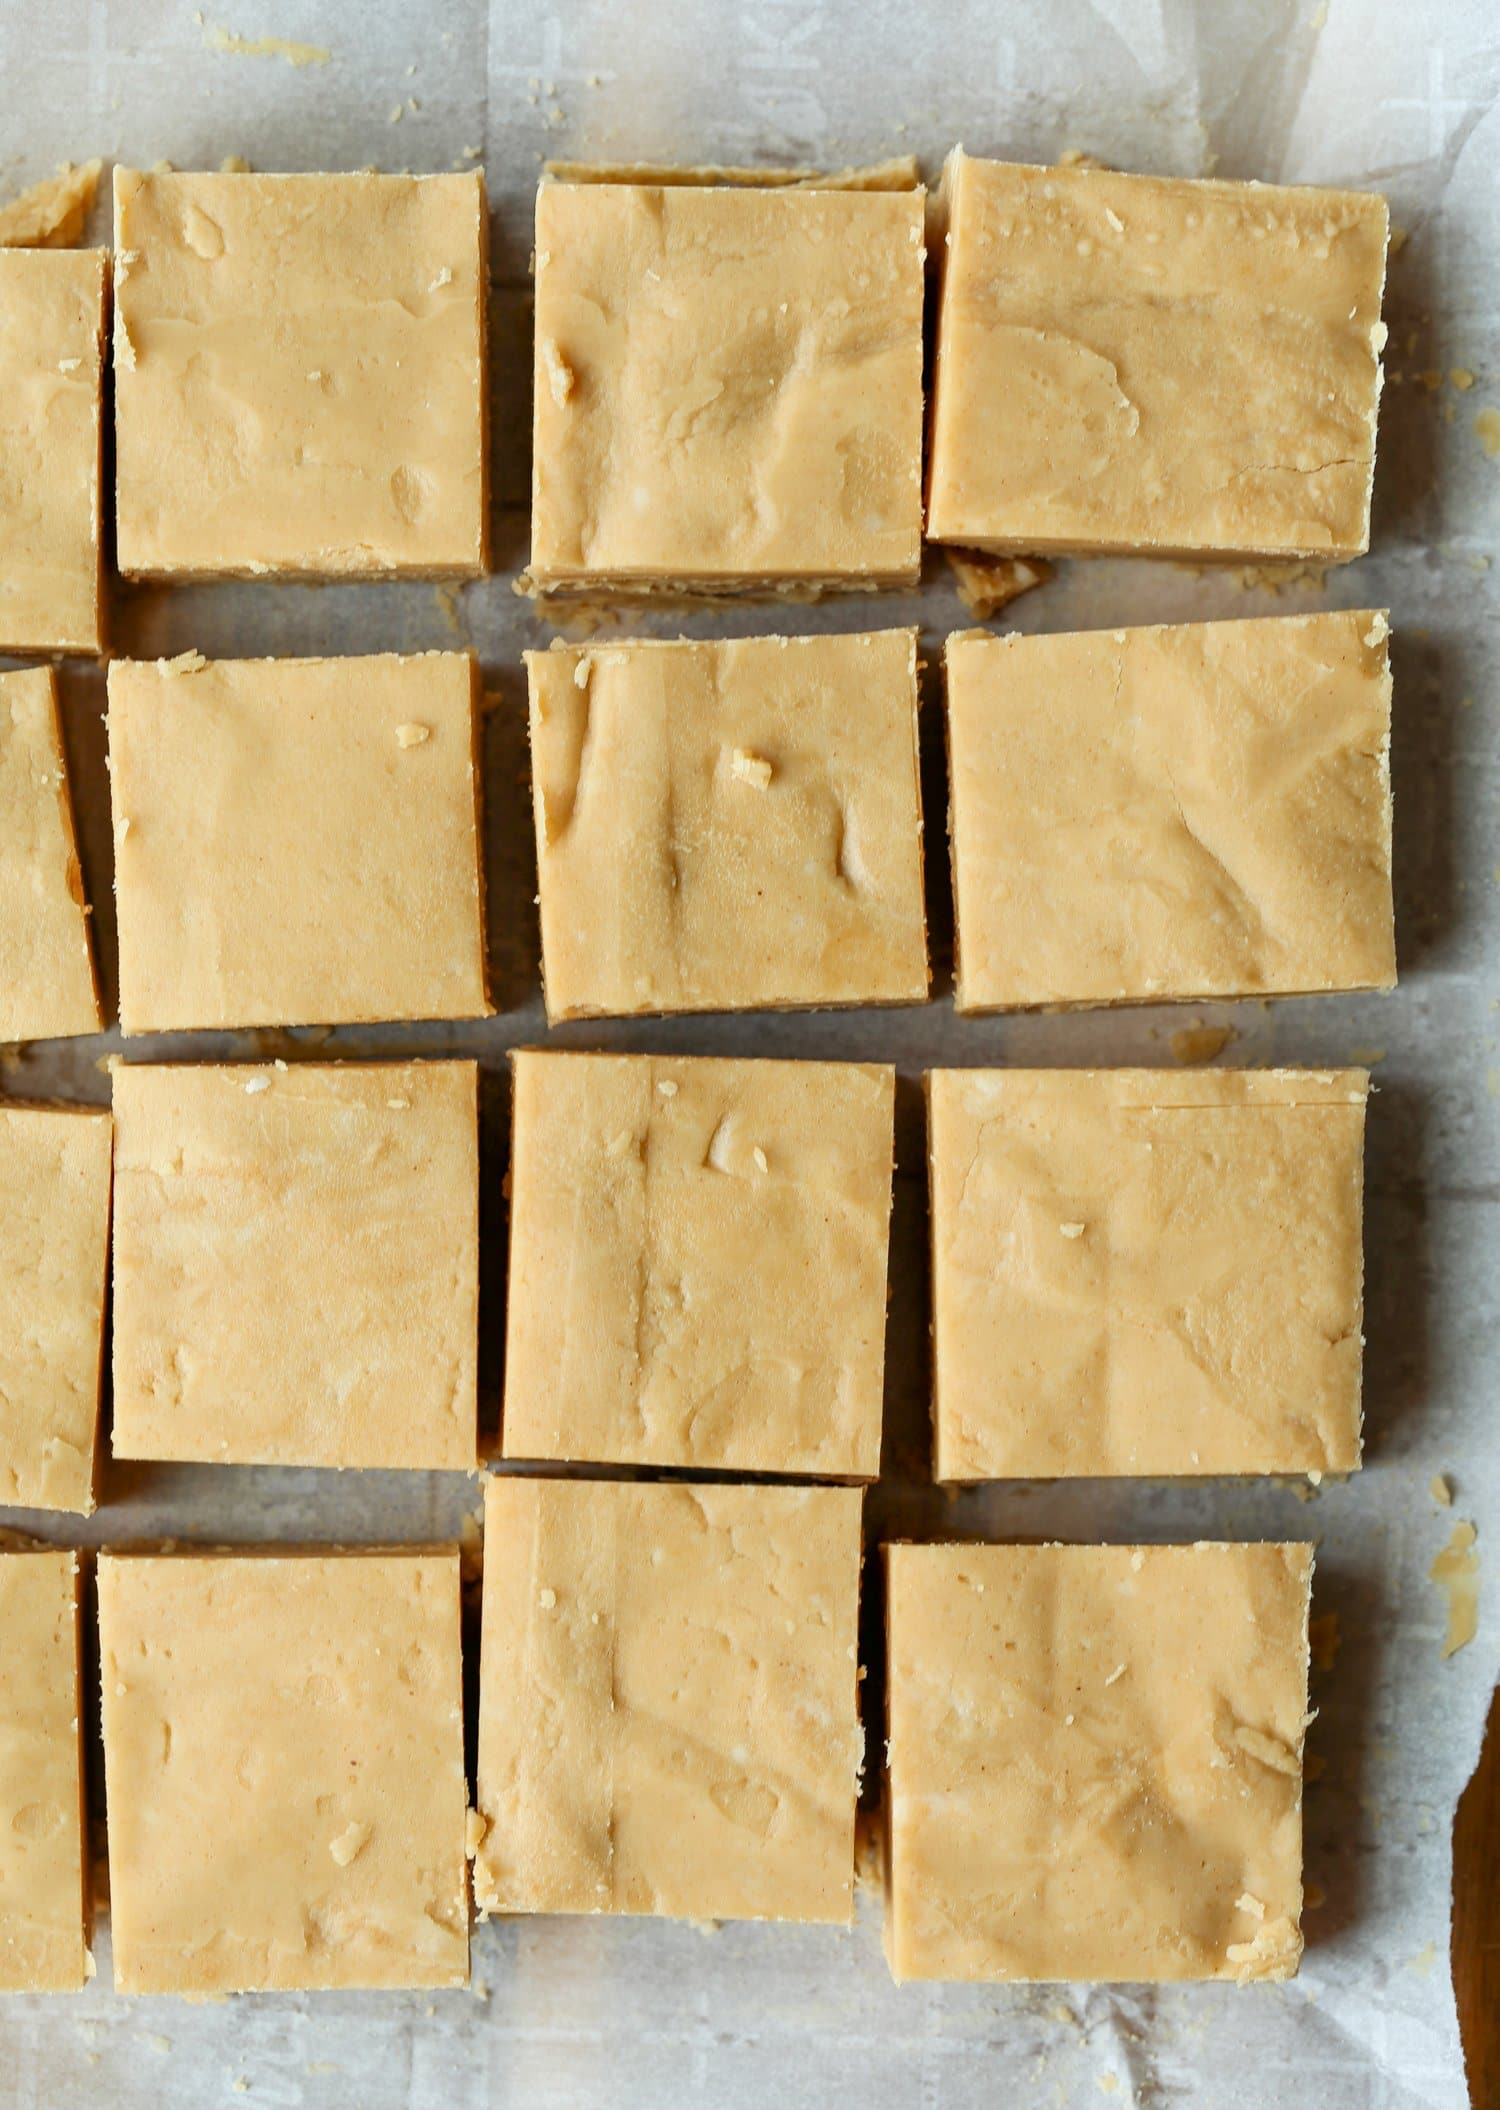 Top view of peanut butter fudge on parchment cut into squares.